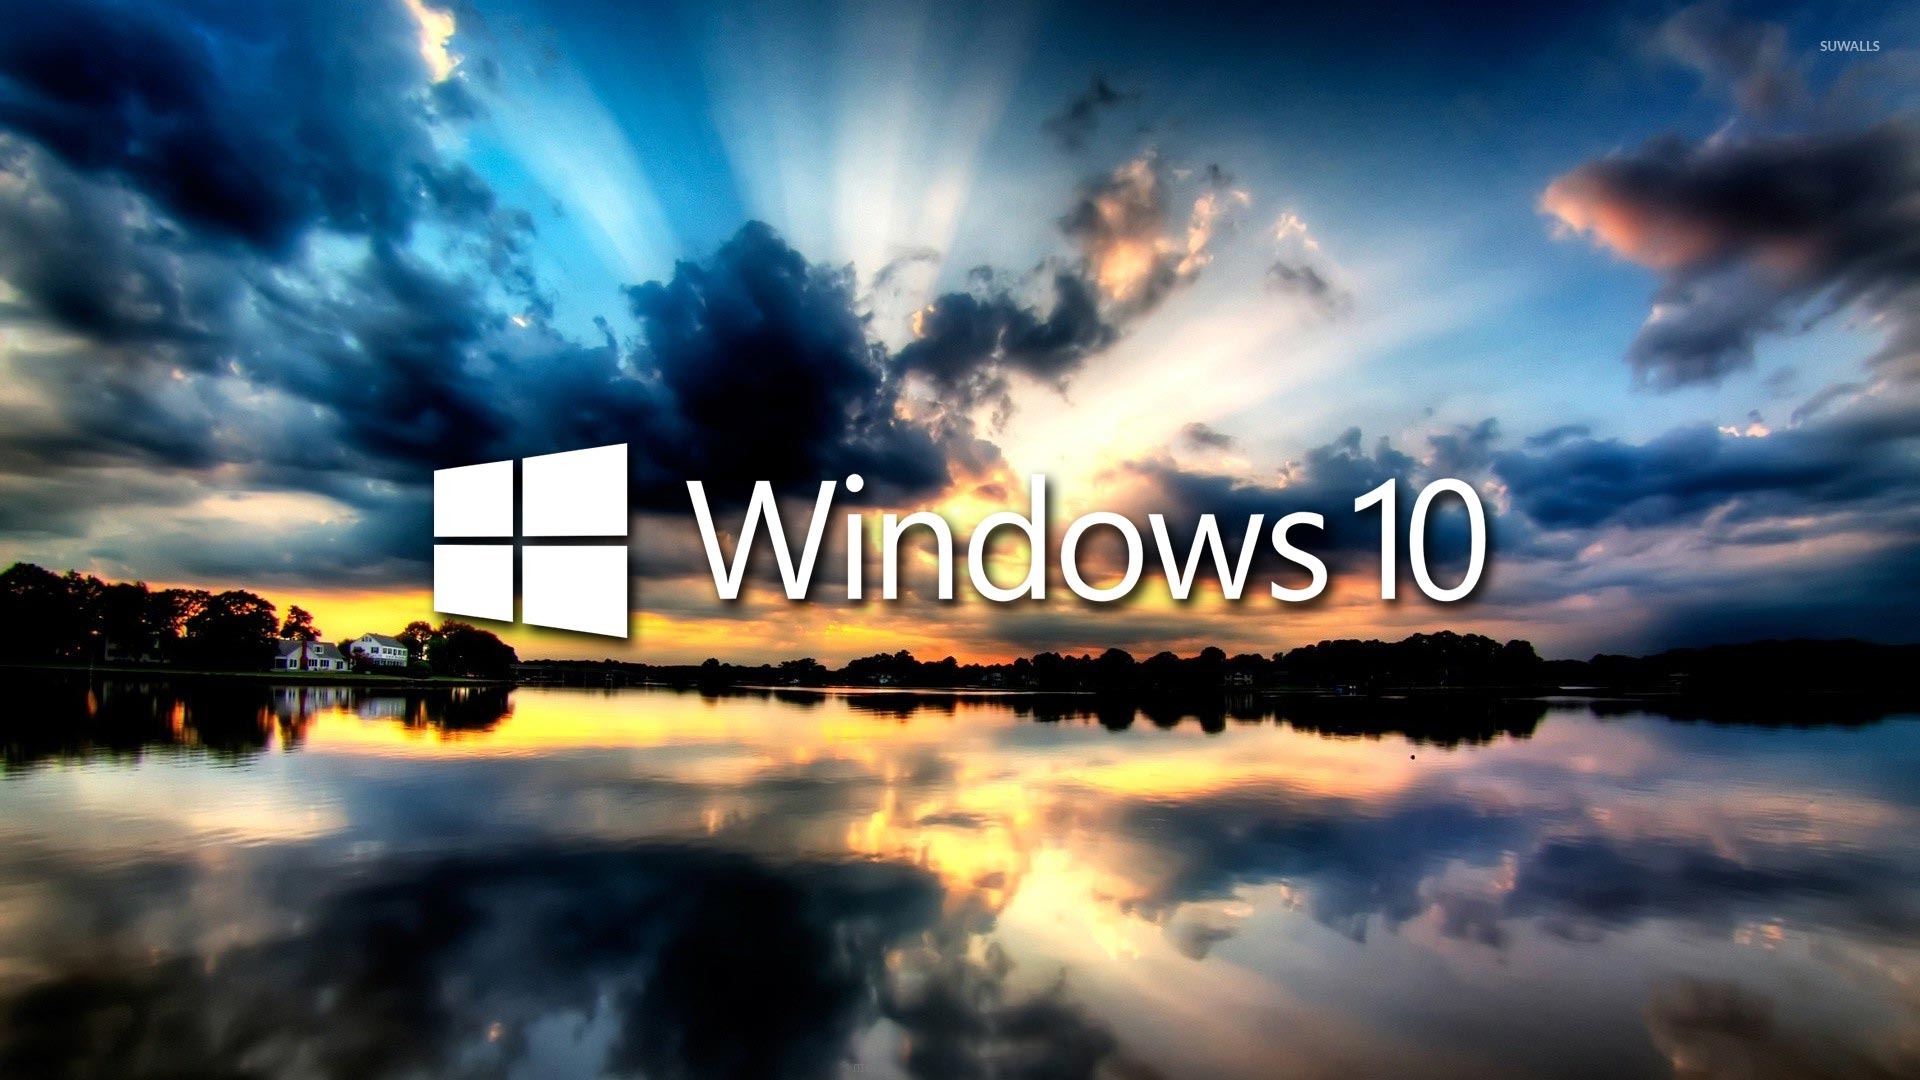 Live Wallpaper For Pc - Hd Desktop Background For Windows 10